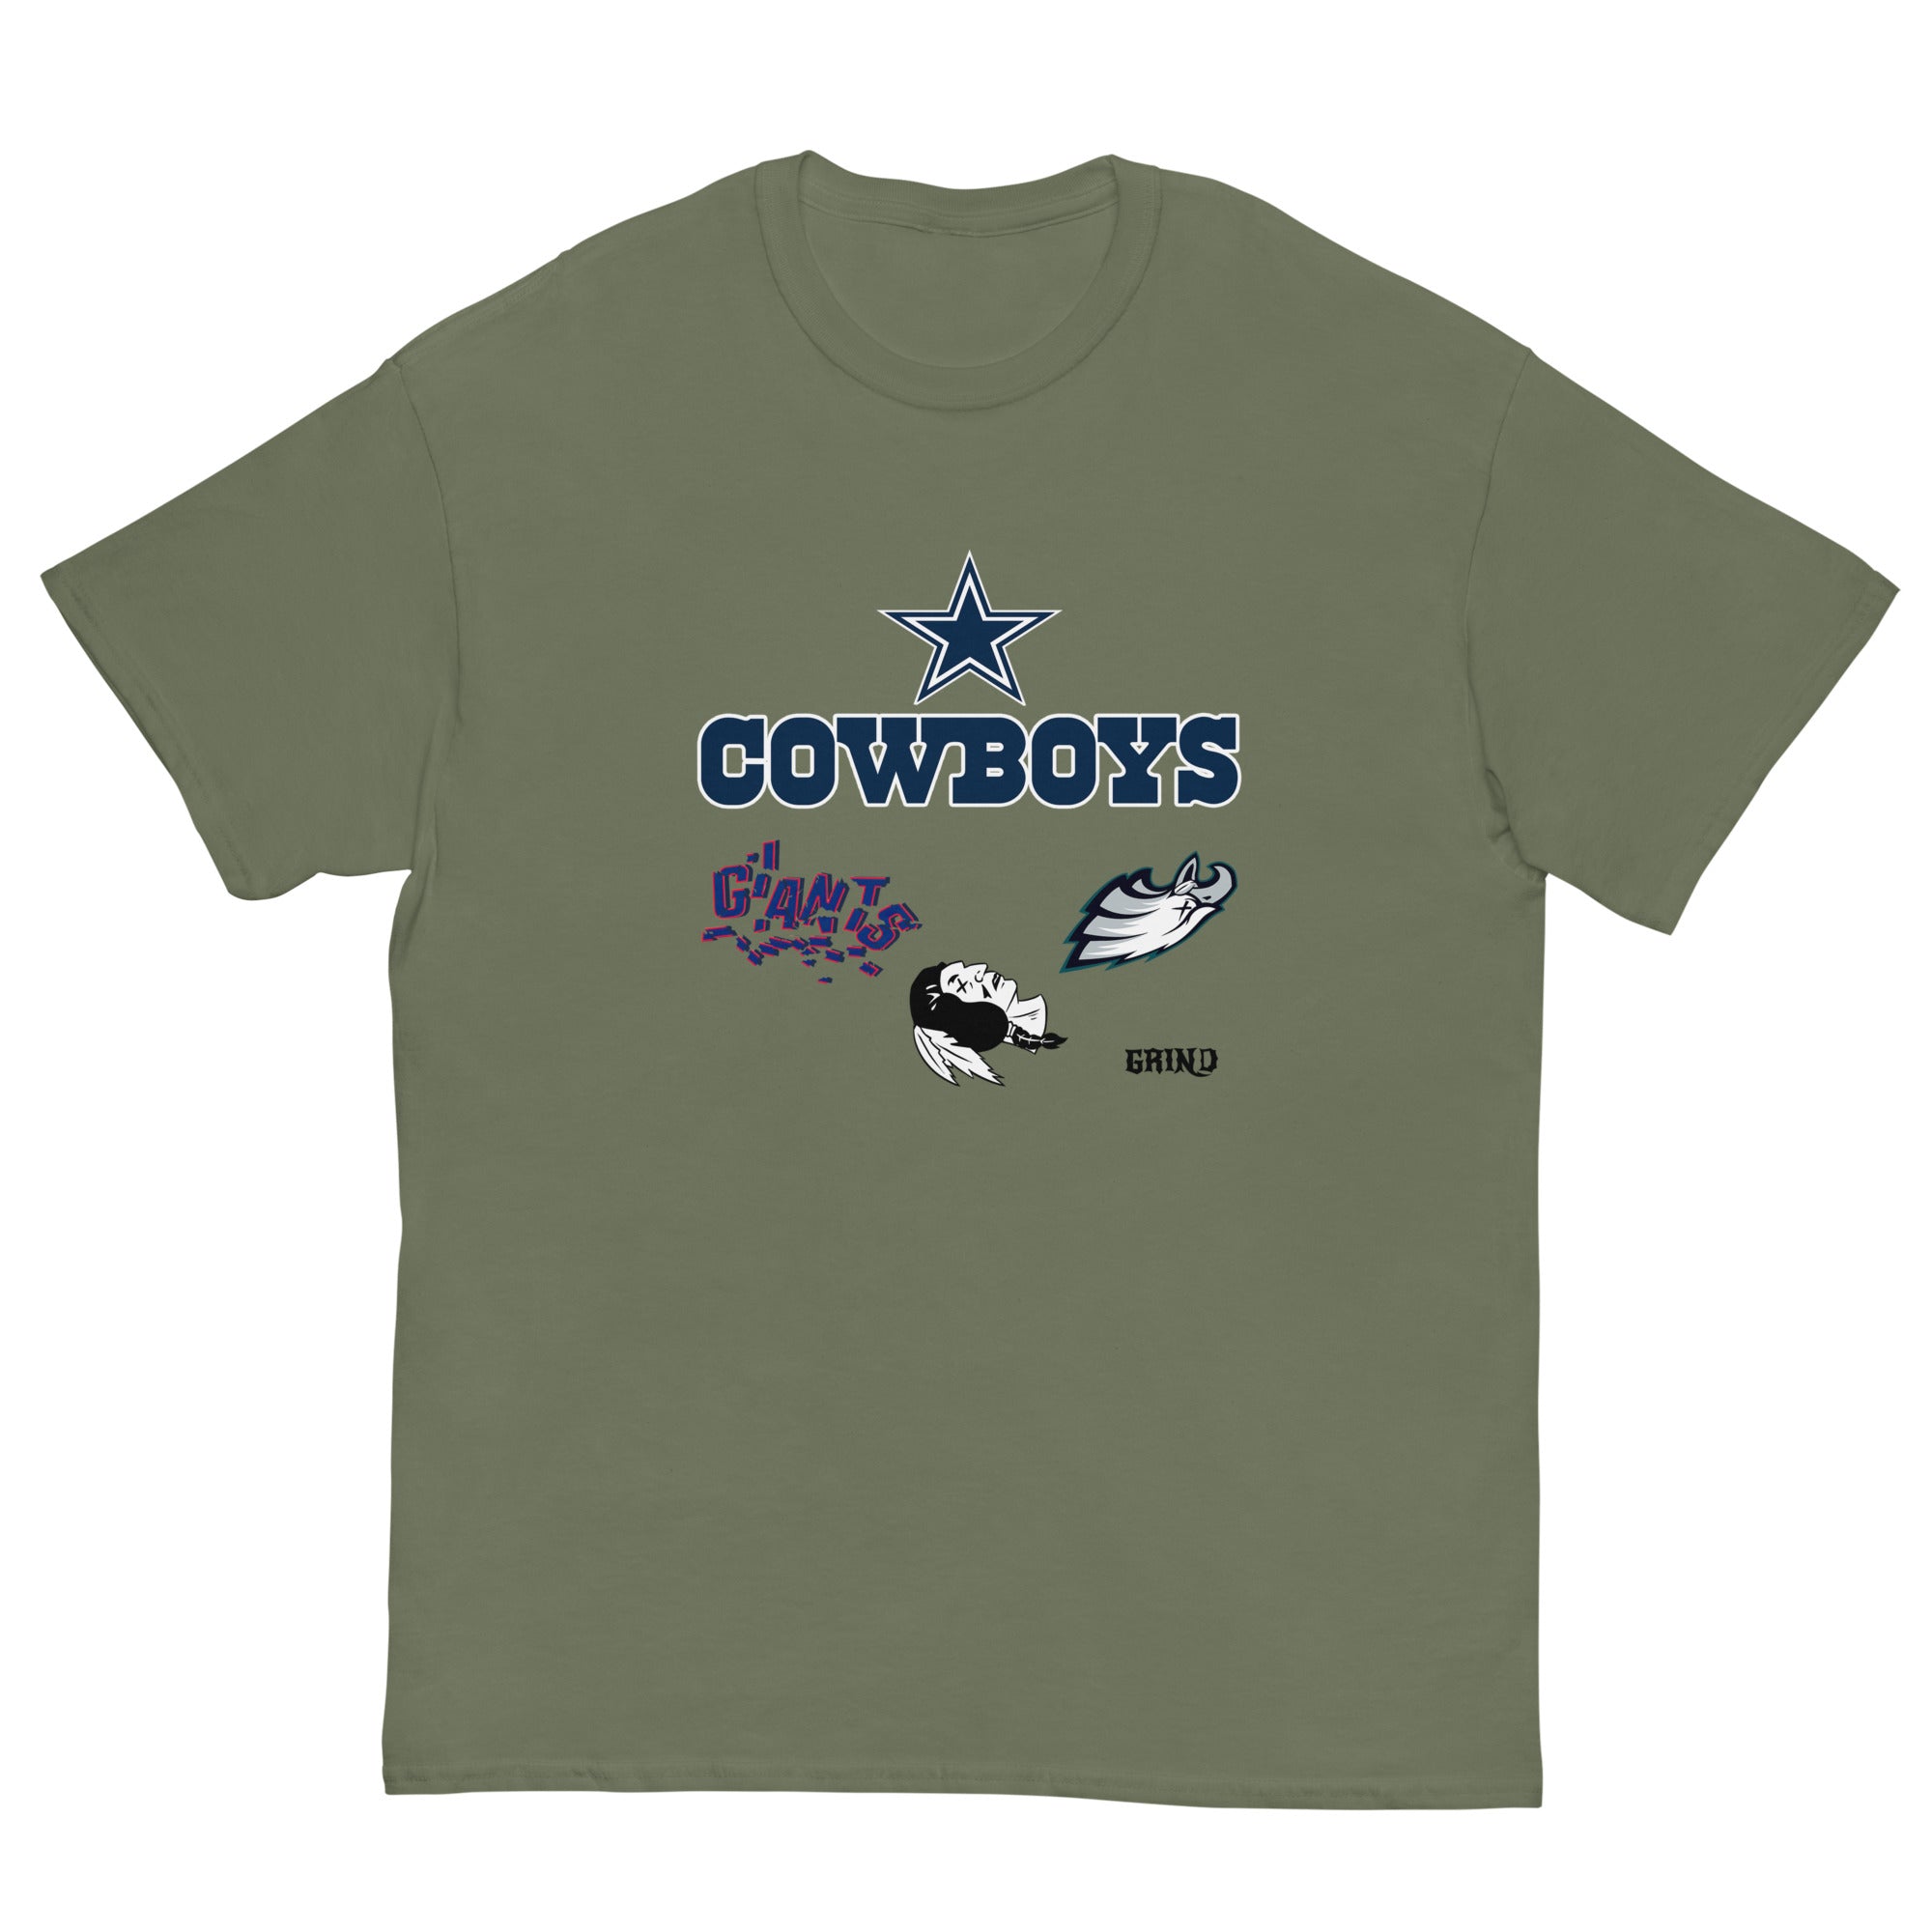 Cowboys "We run the East' Shirt